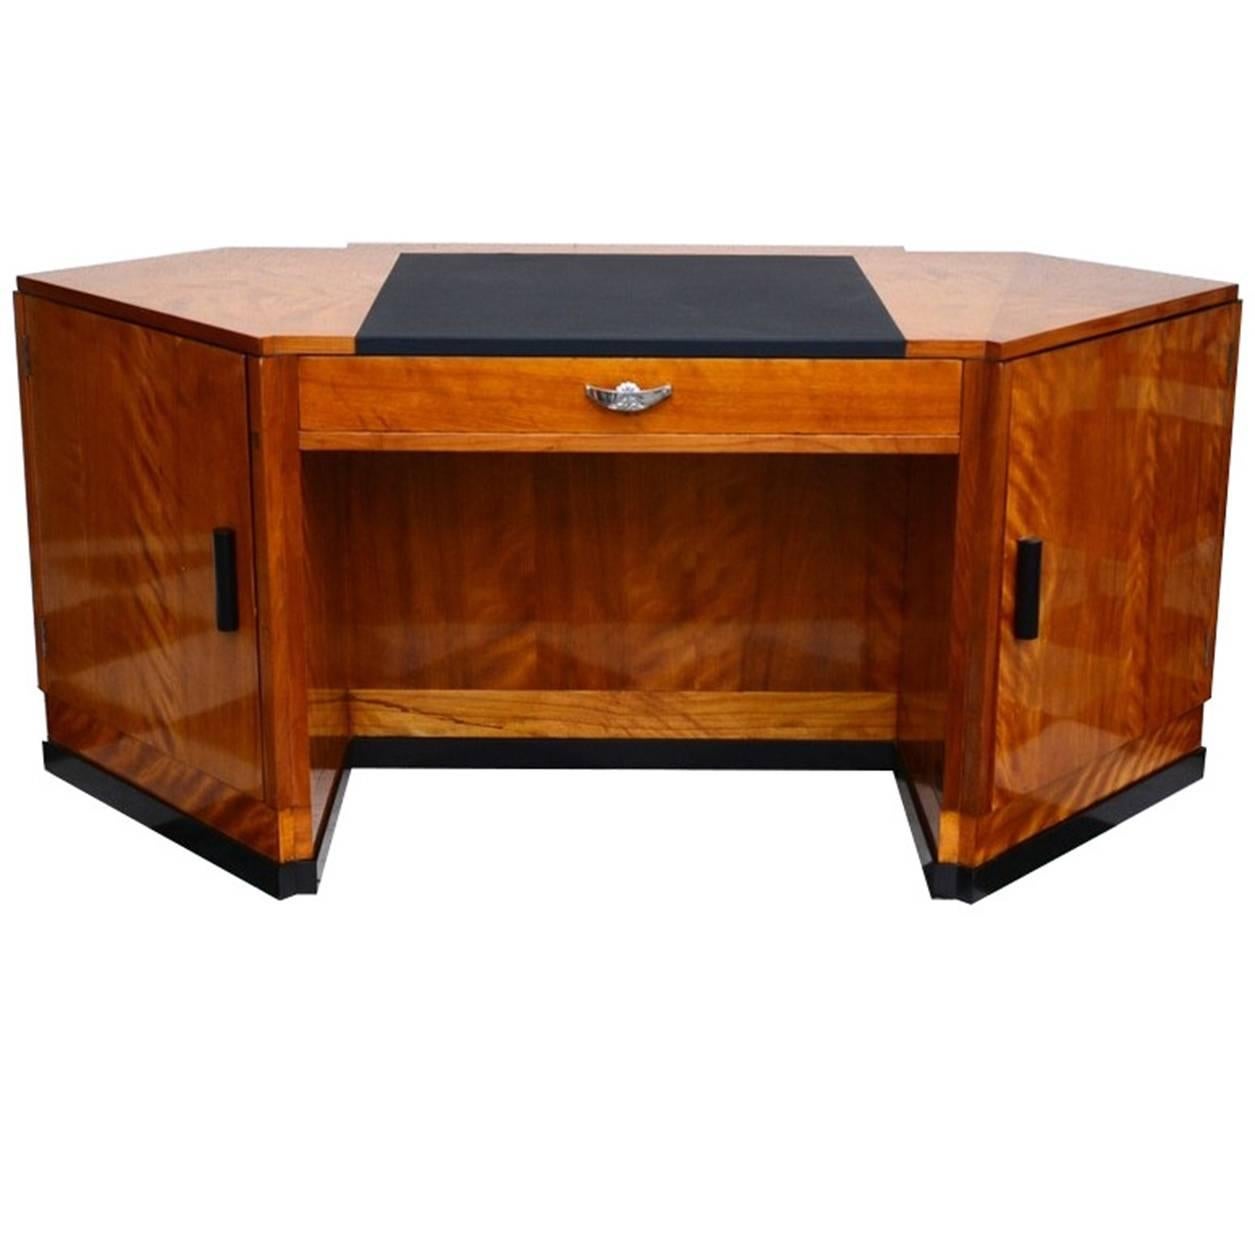 Hexagonal Art Deco Desk Made of Cherry and Mahogany Wood